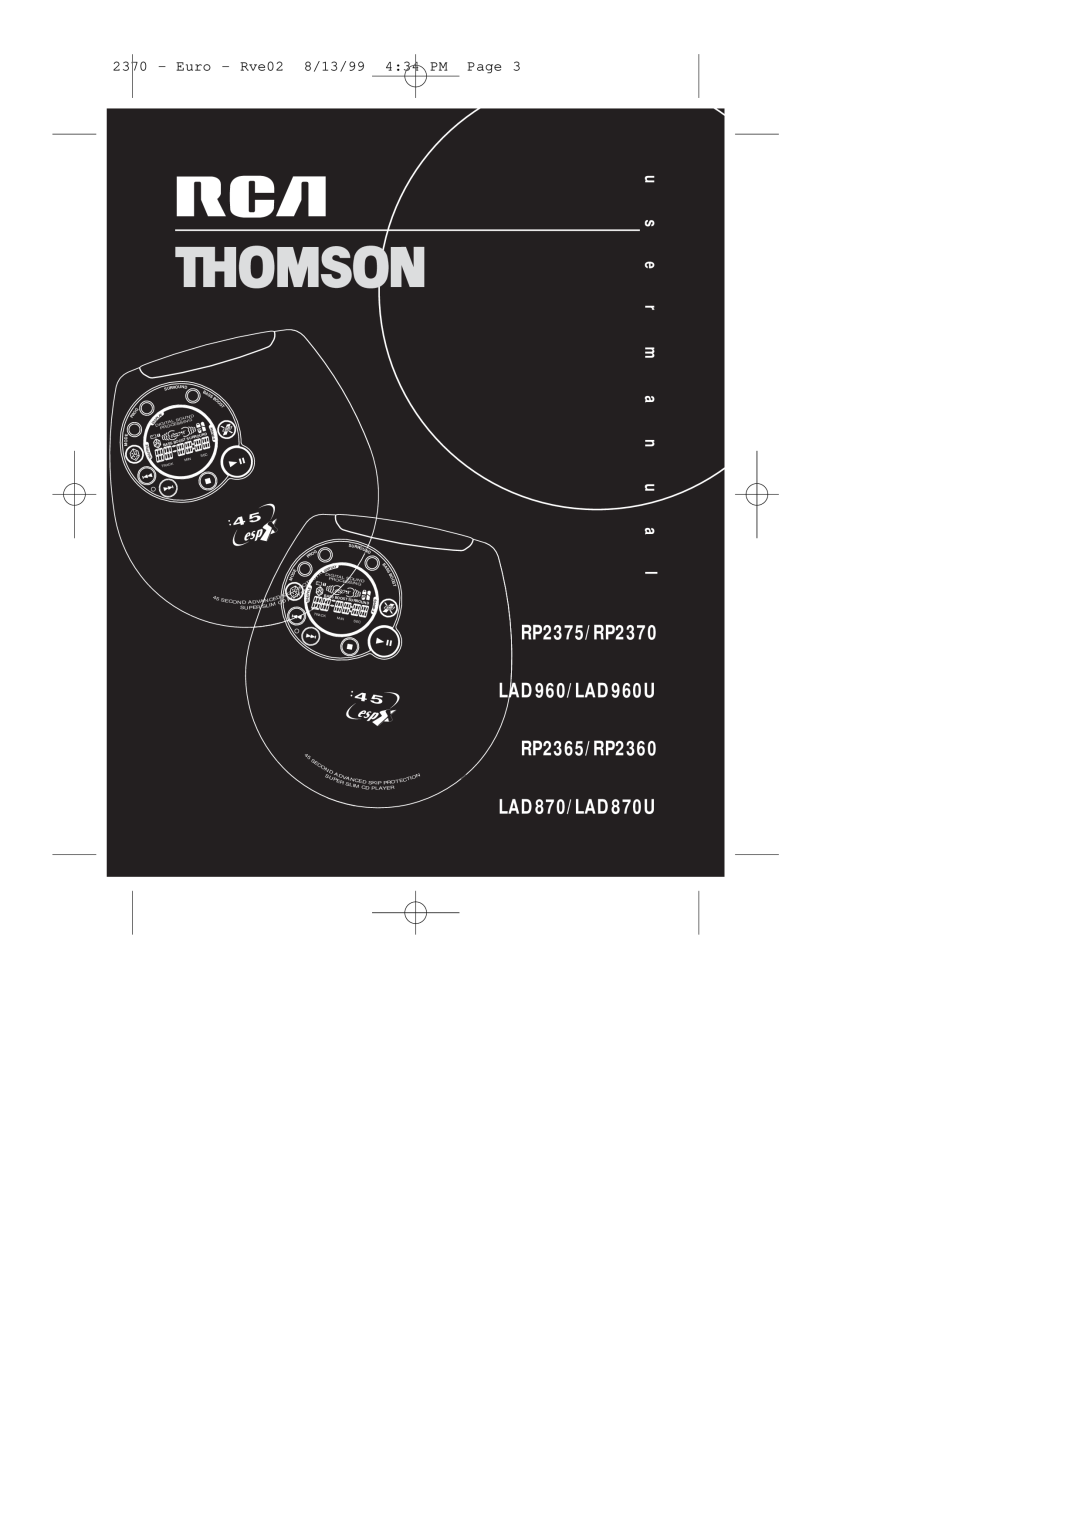 Technicolor - Thomson manual u s e r m a n u, LAD960/LAD960U RP2365/RP2360 LAD870/LAD870U, RP2375/RP2370 